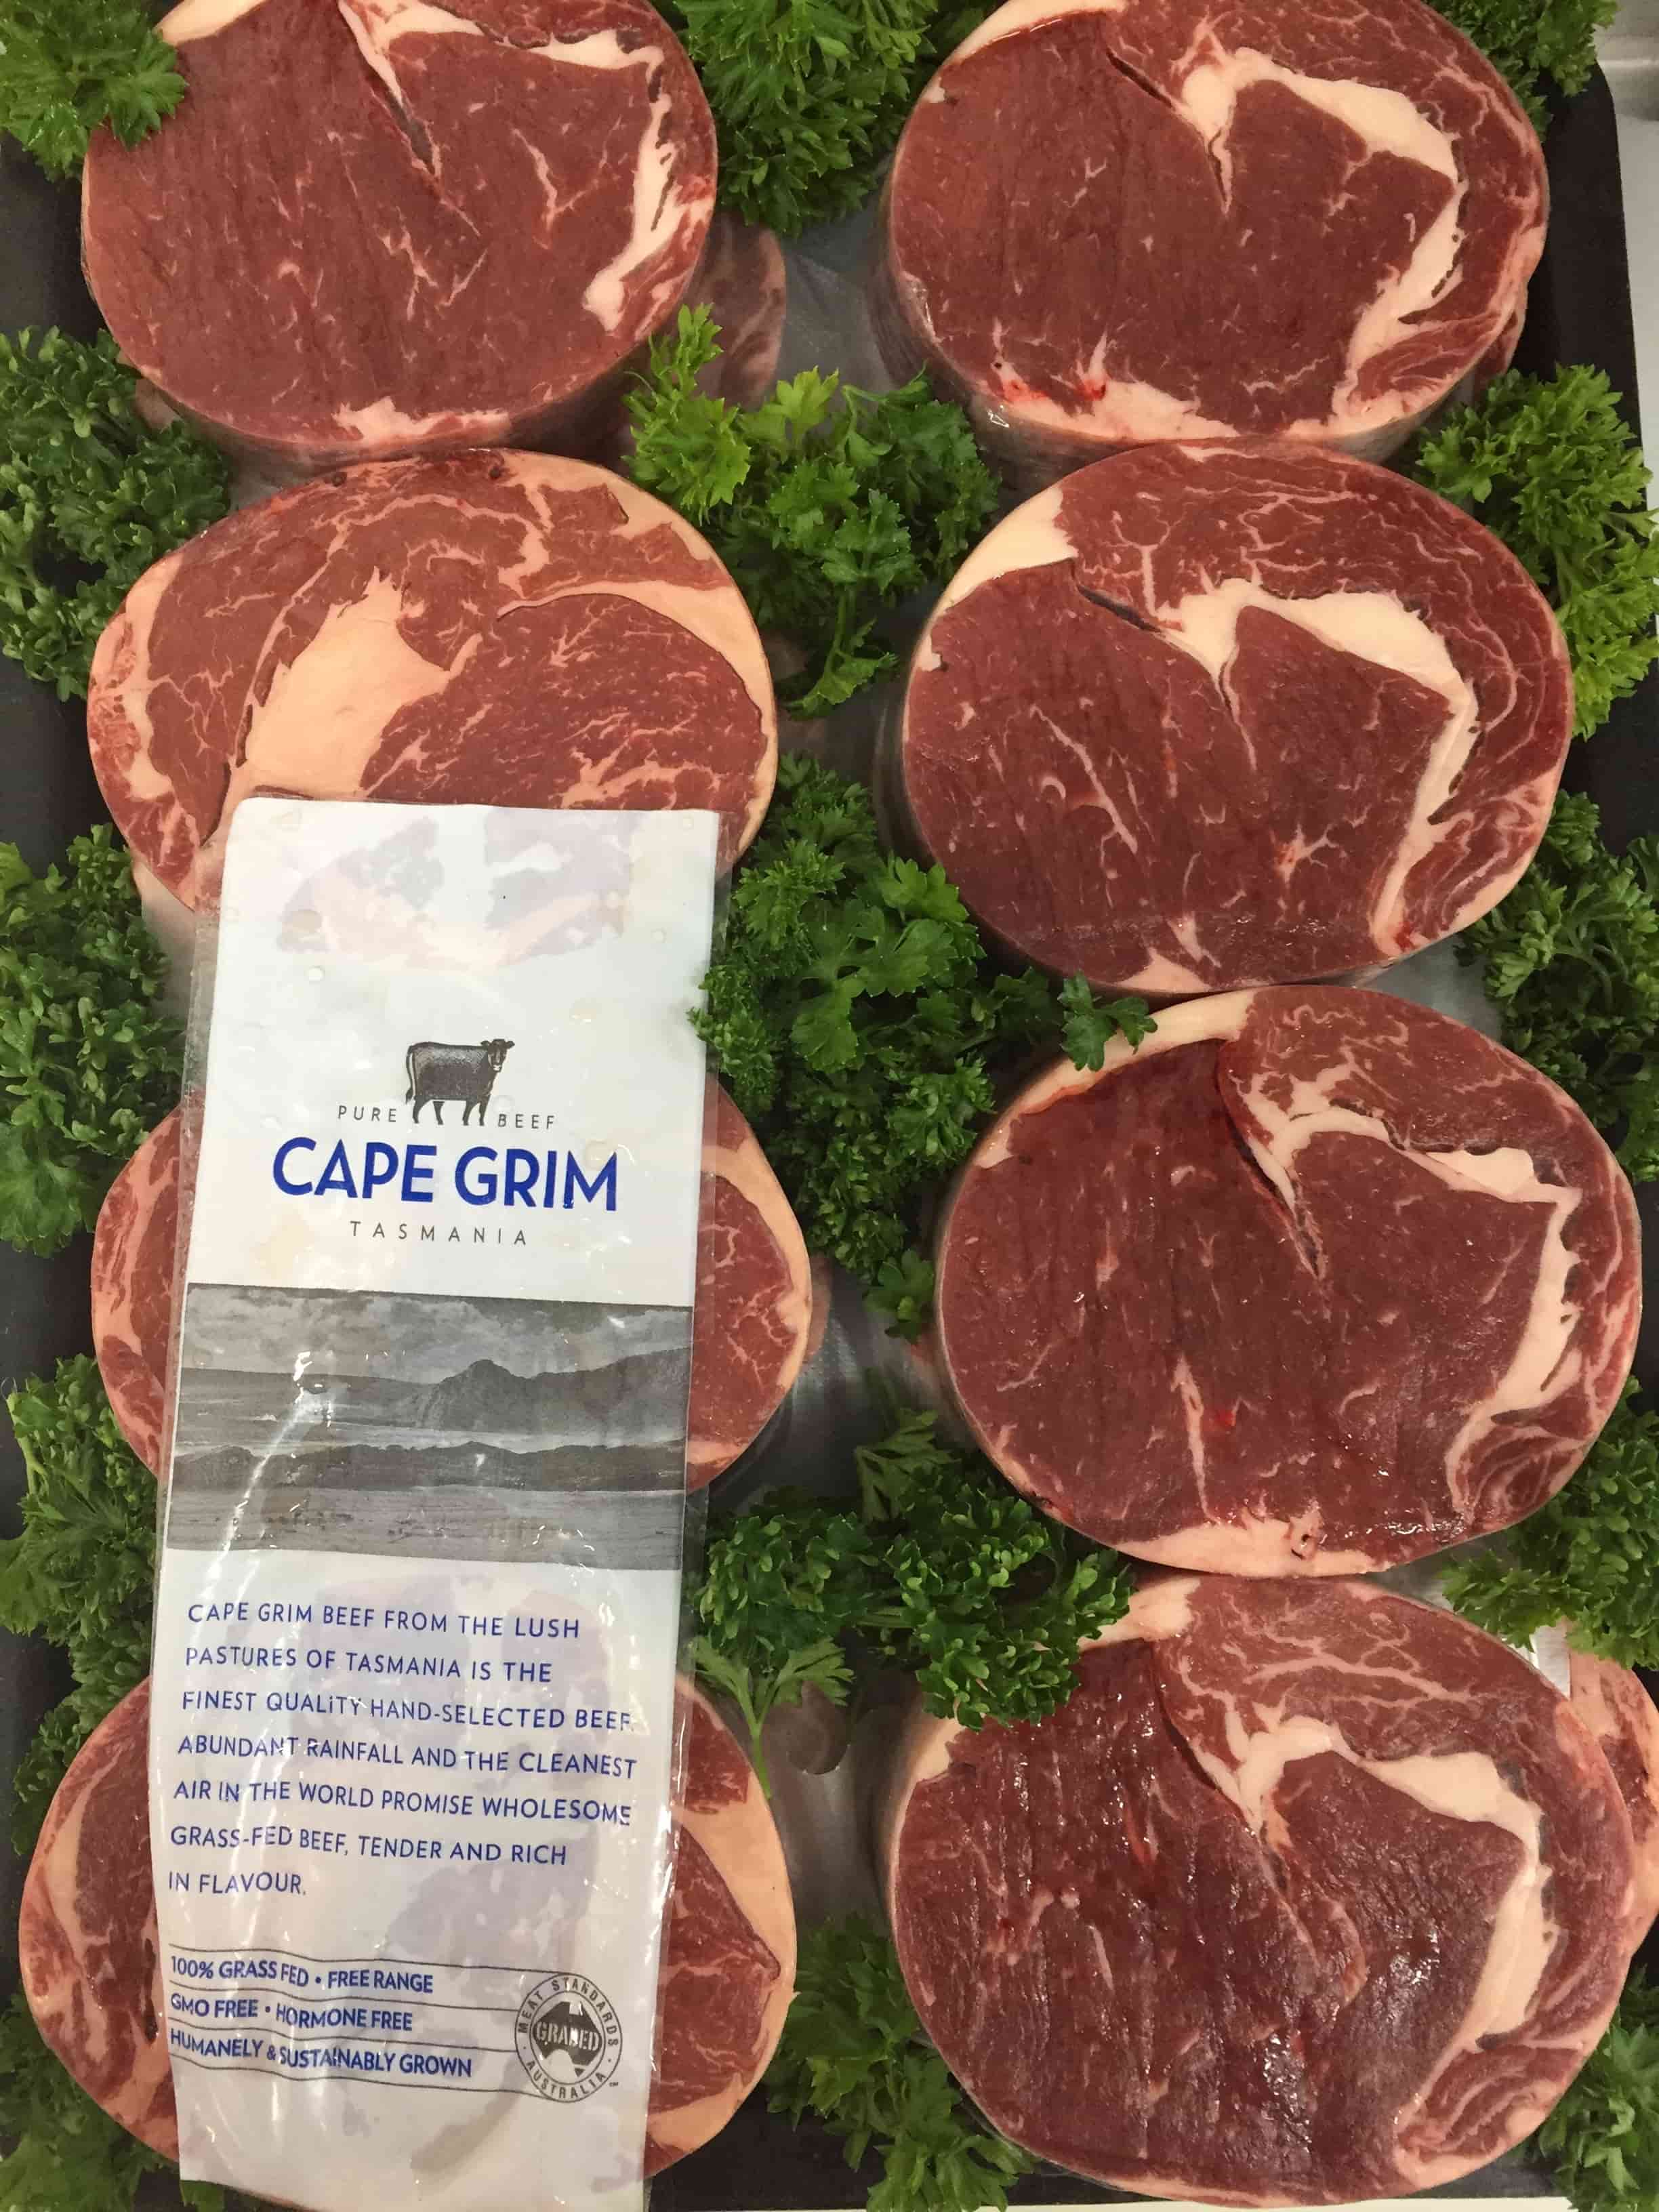 Cape grim grass fed beef